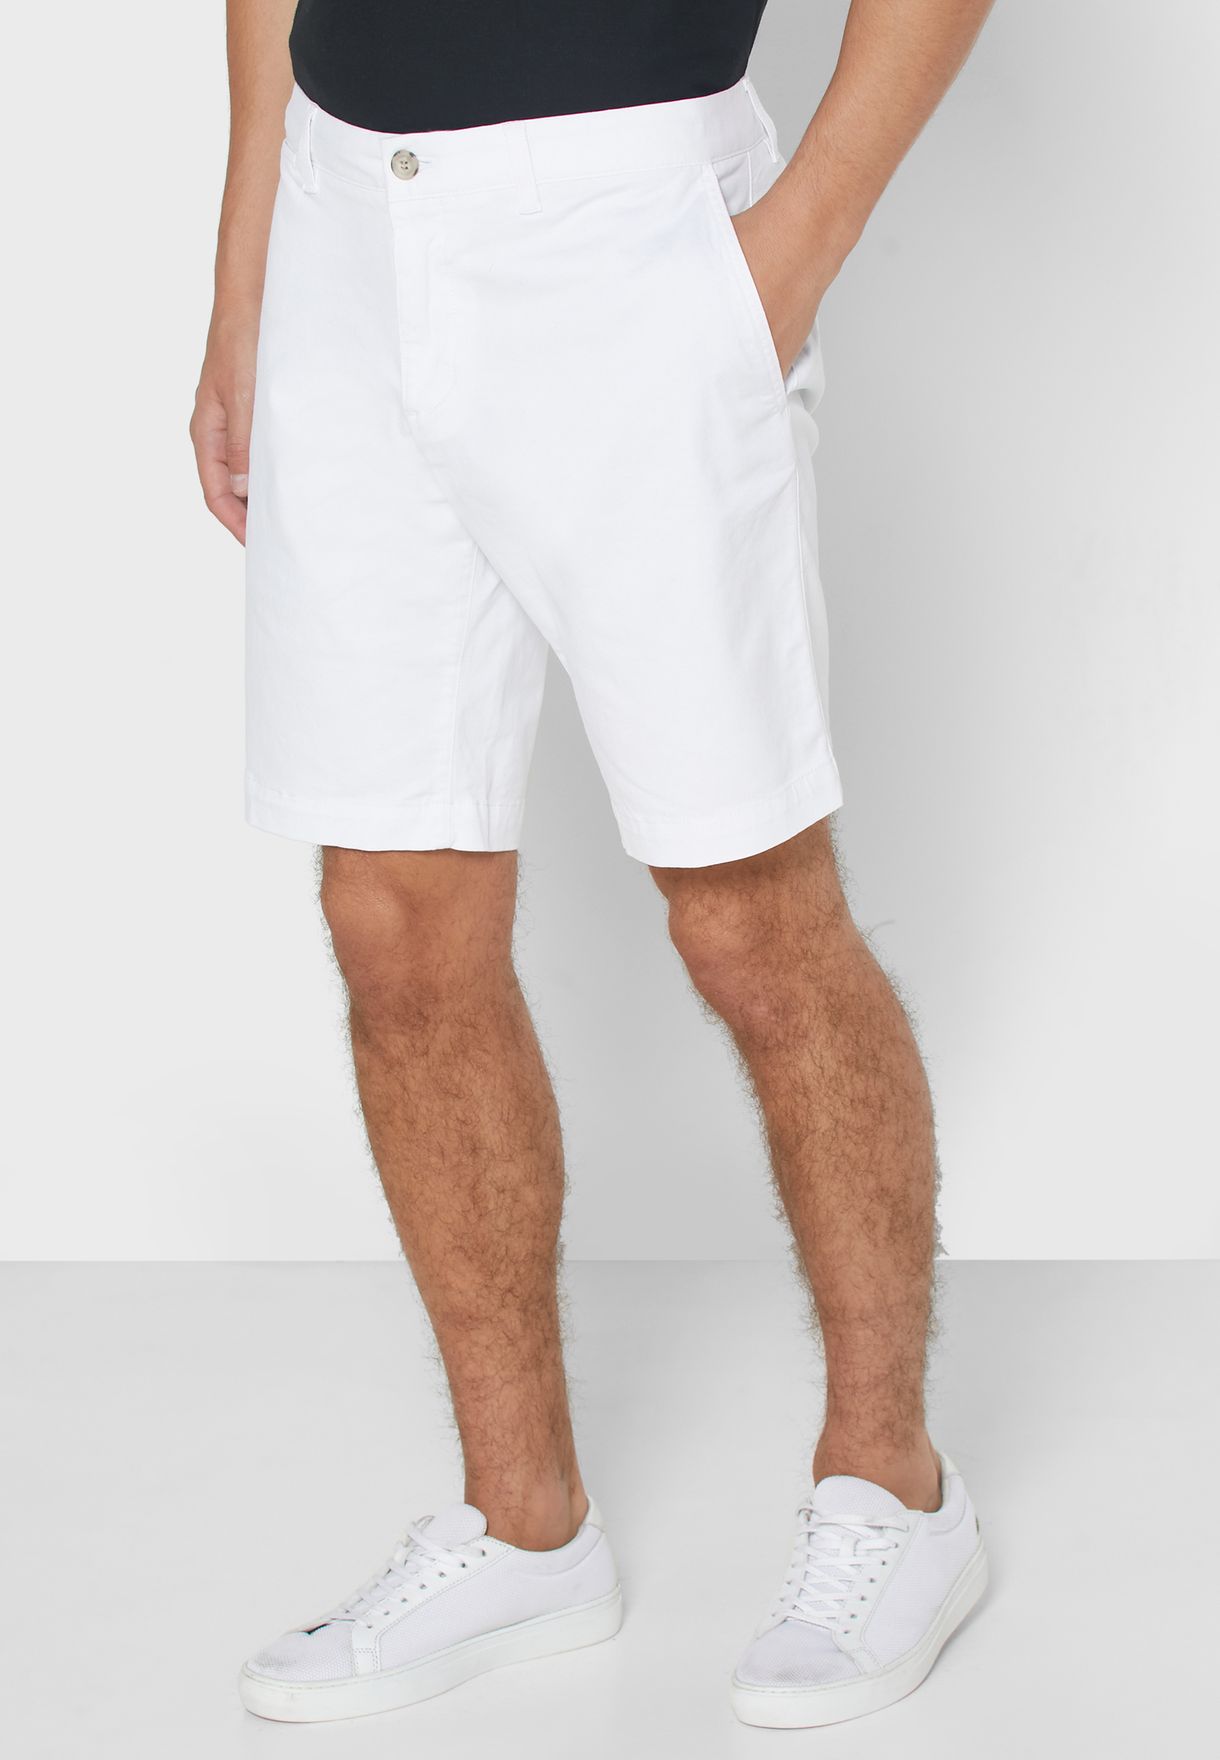 mens white lacoste shorts